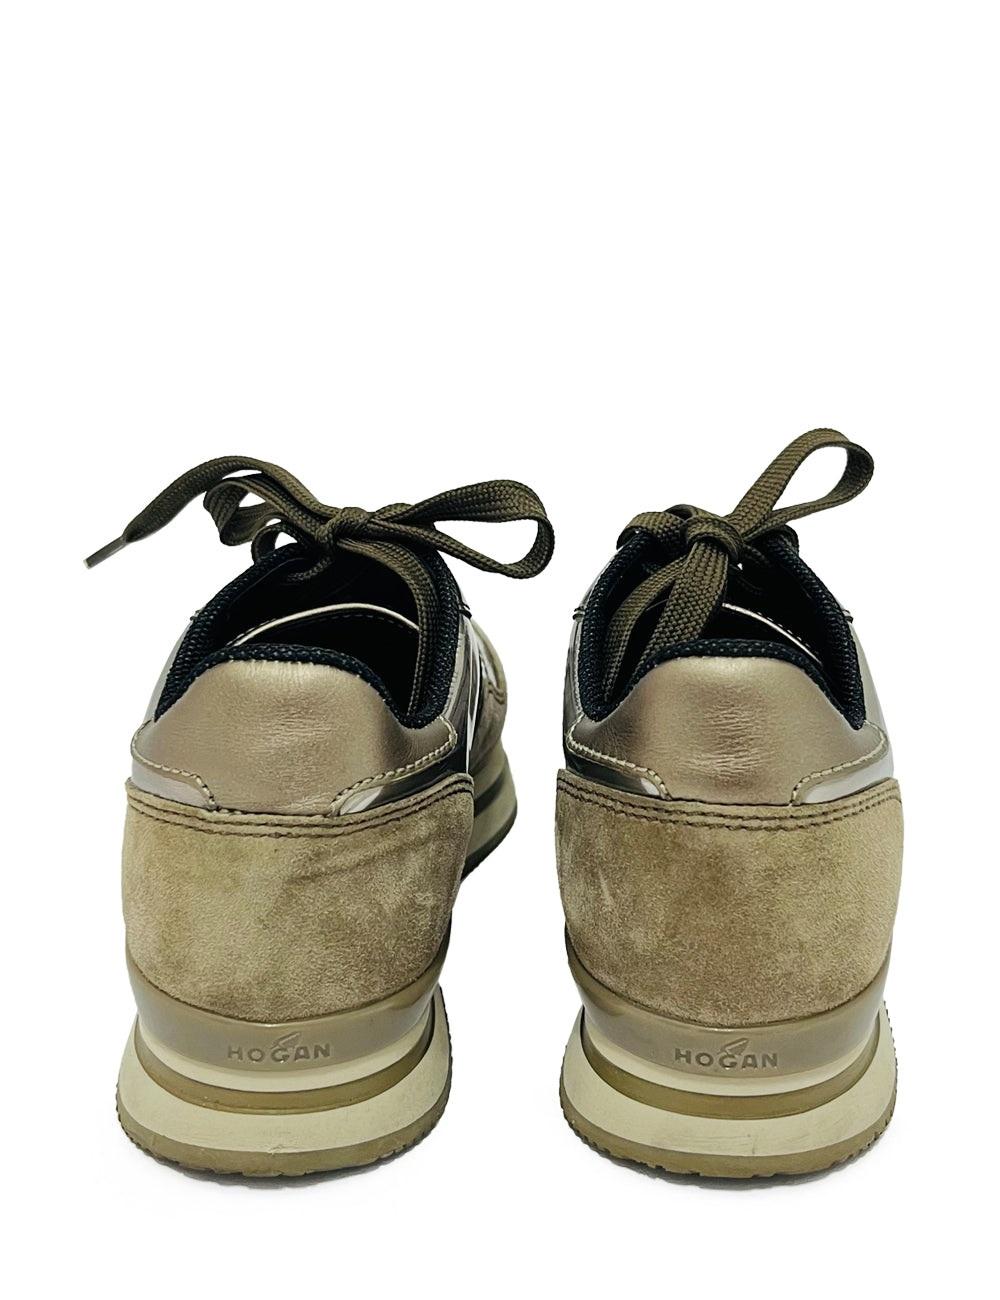 Women's Hogan EU 37 Grey Metallic Patent Leather Sneakers For Sale